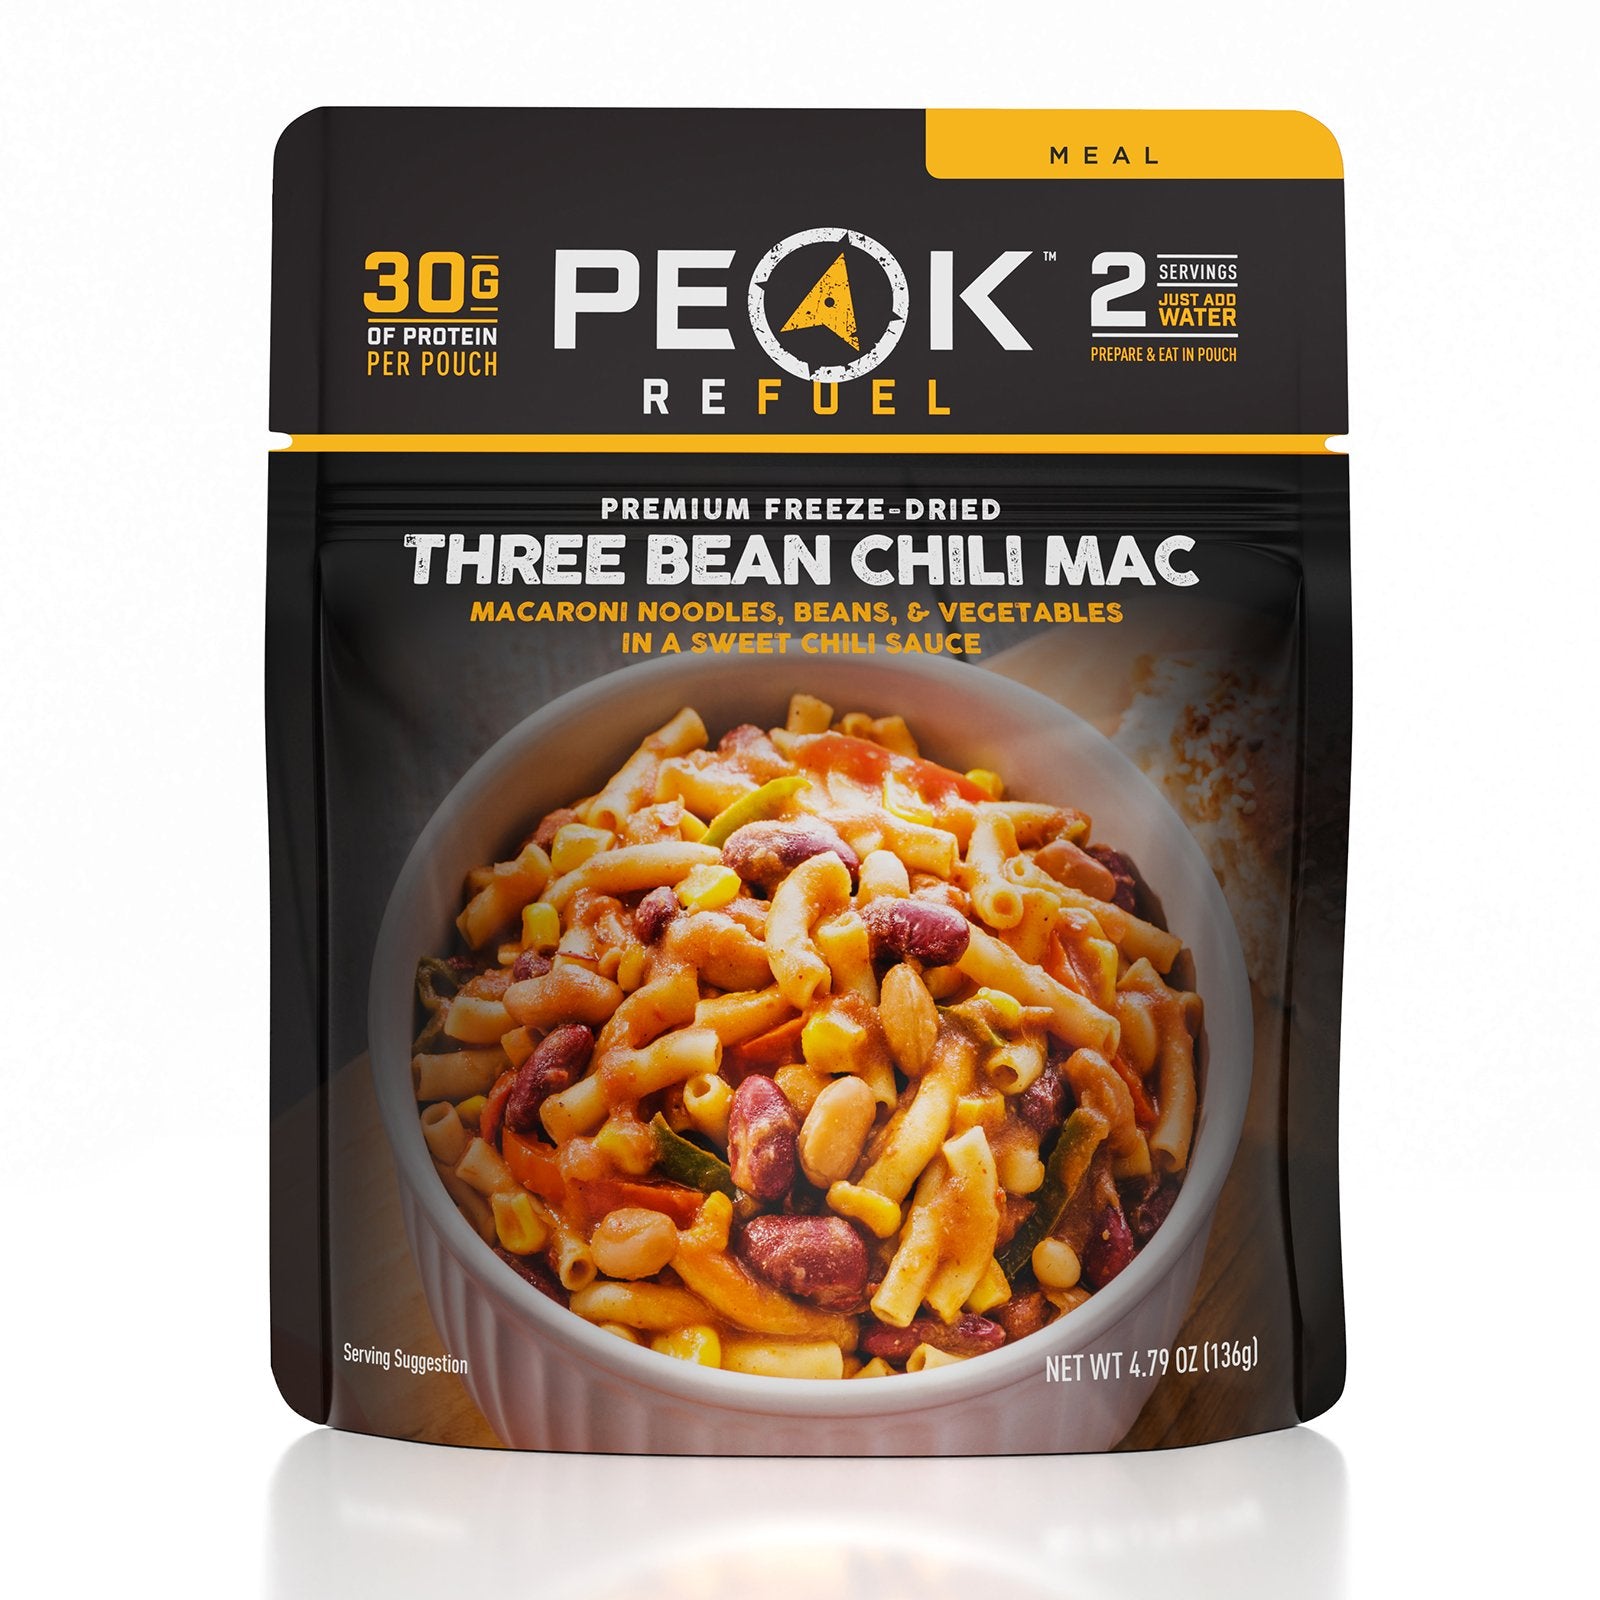 Peak Refuel Three Bean Chilli Mac